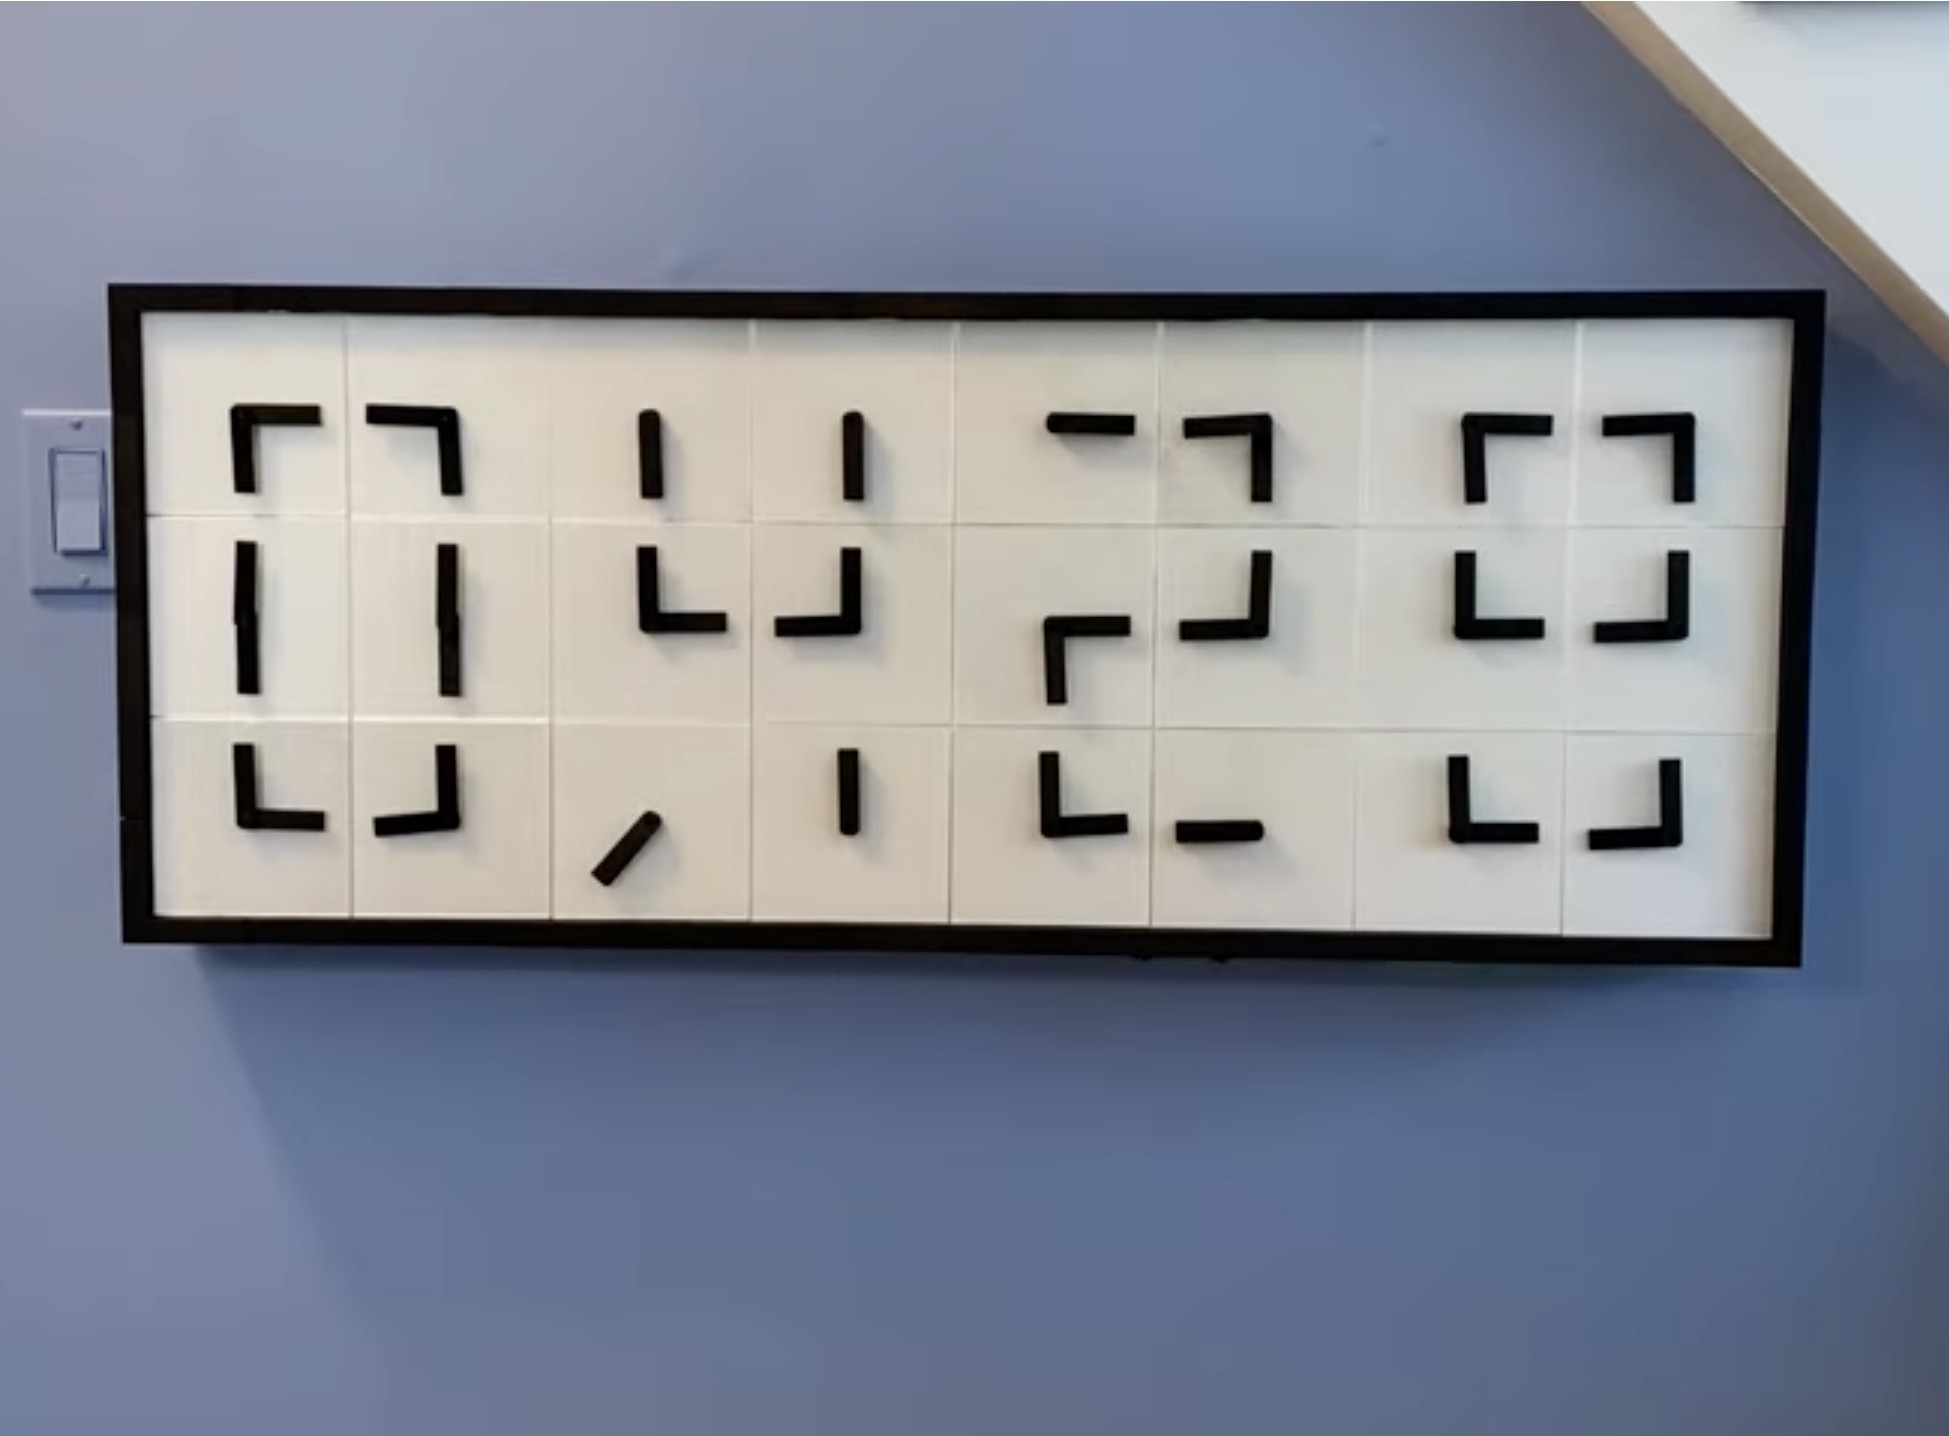 3D printed digital clock contains 24 analog clocks